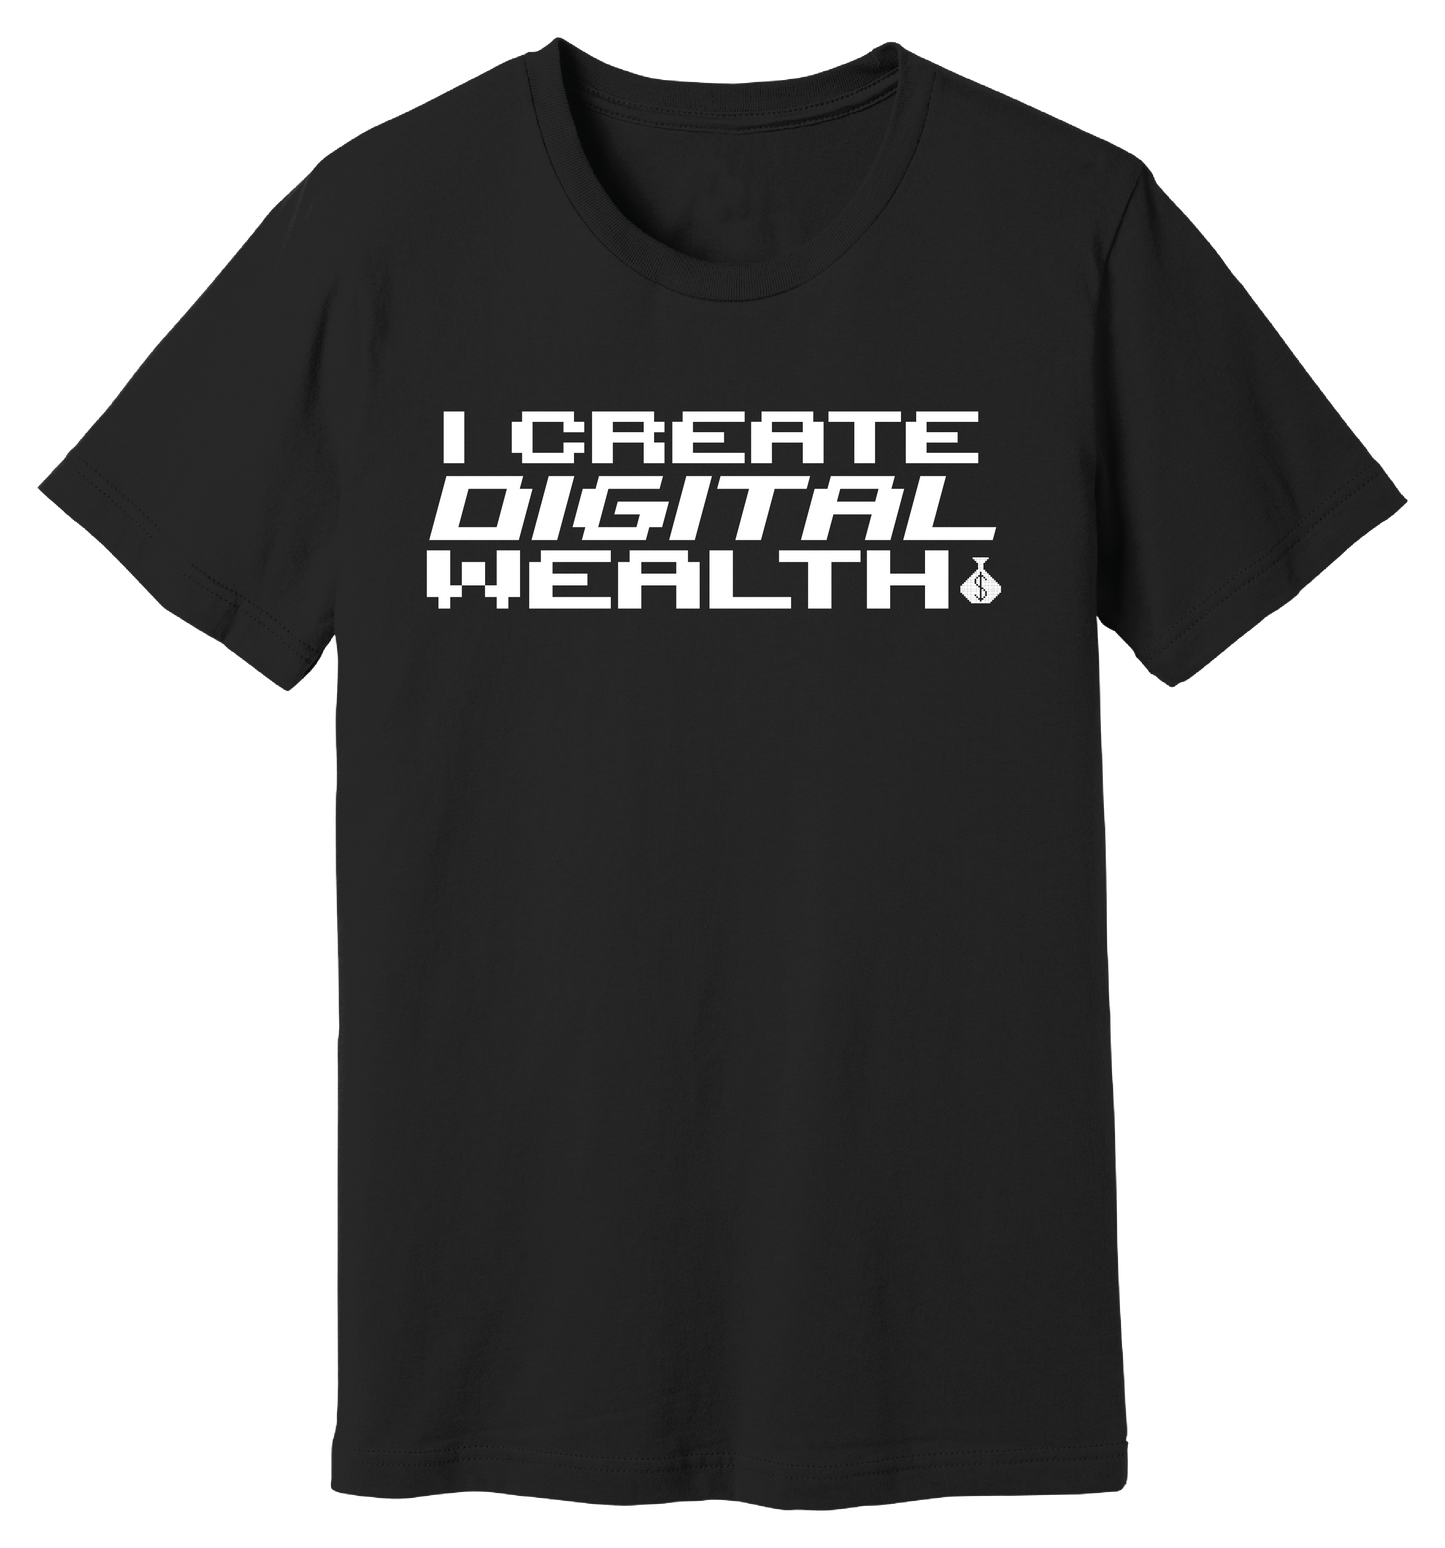 I Create Digital Wealth Remix Unisex T-shirt Black